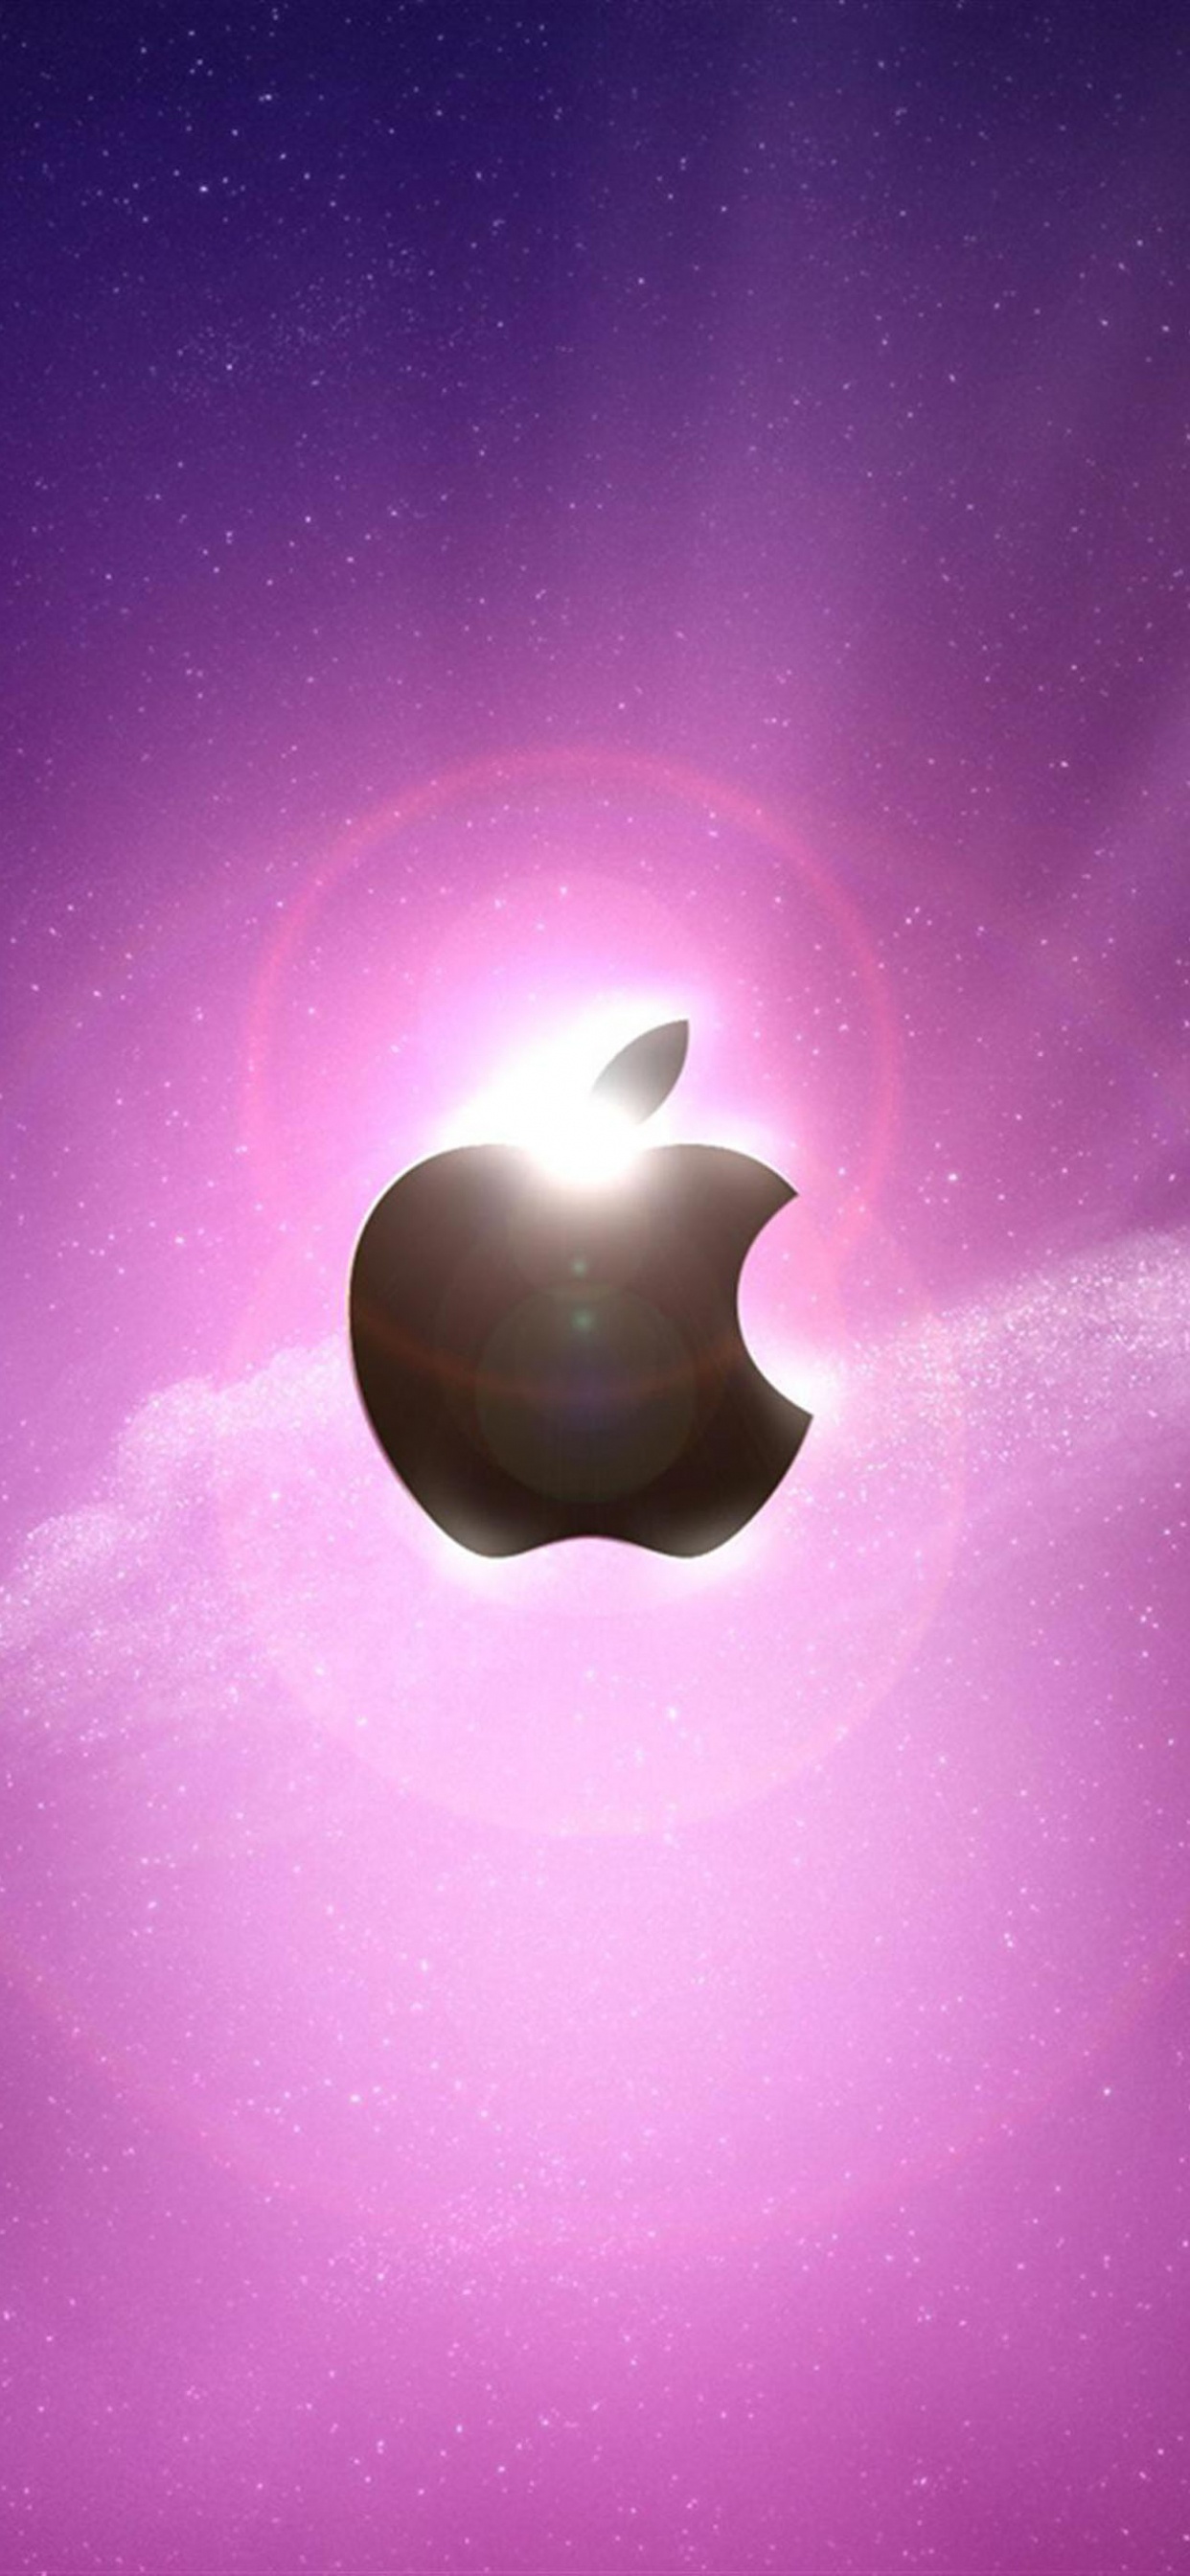 Apple, 苹果它, 紫色的, 紫罗兰色, 气氛 壁纸 1242x2688 允许